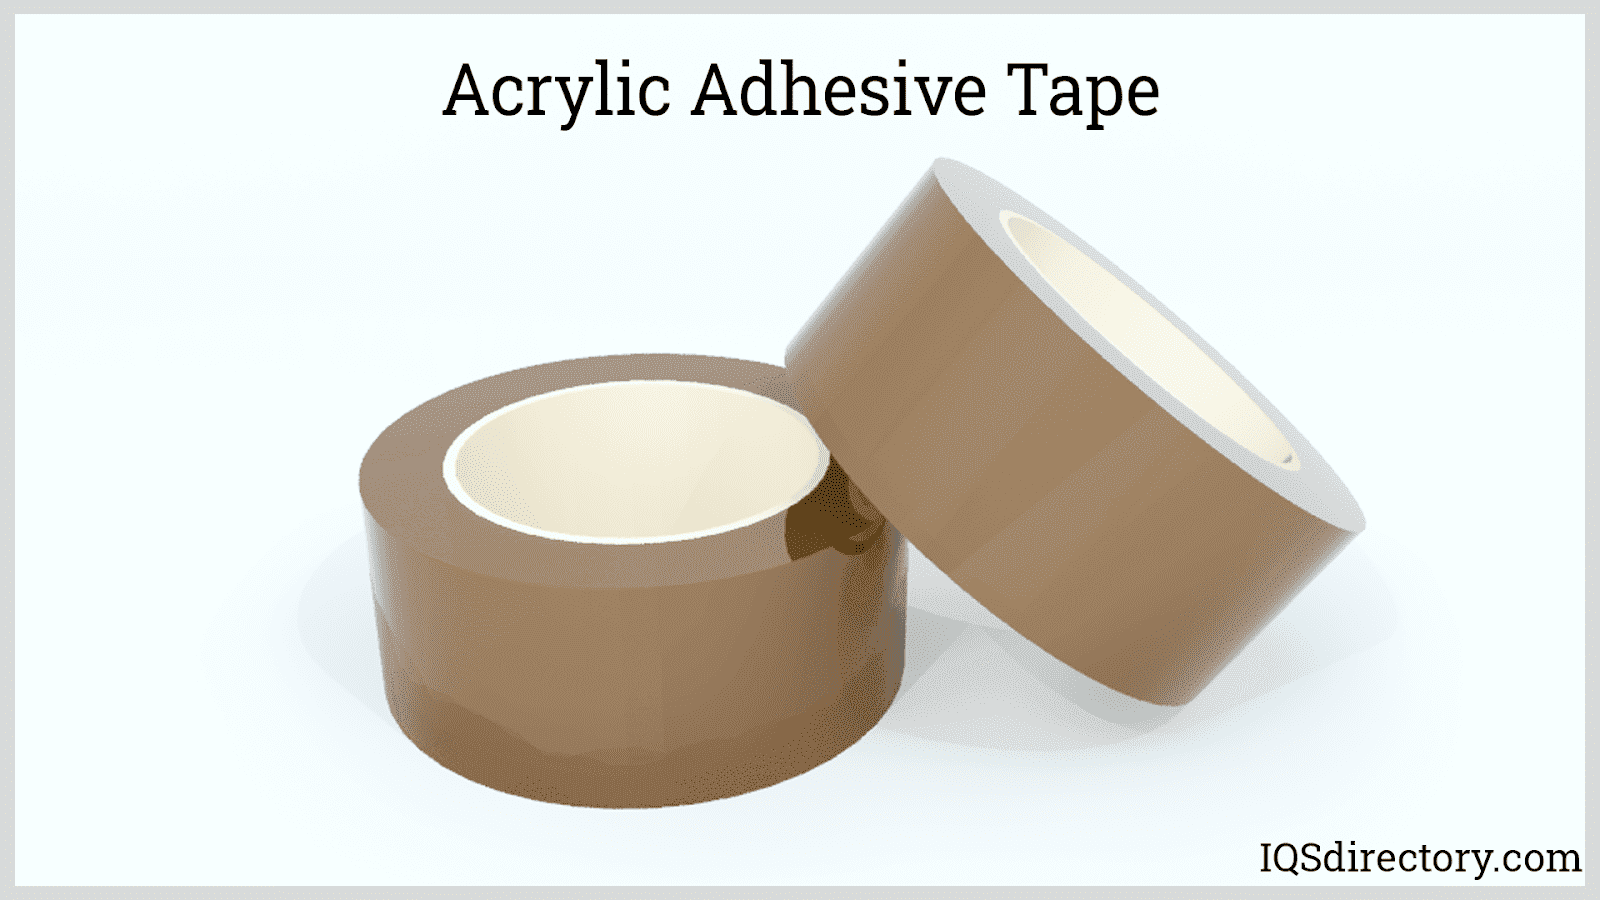 Acrylic Adhesive Tape